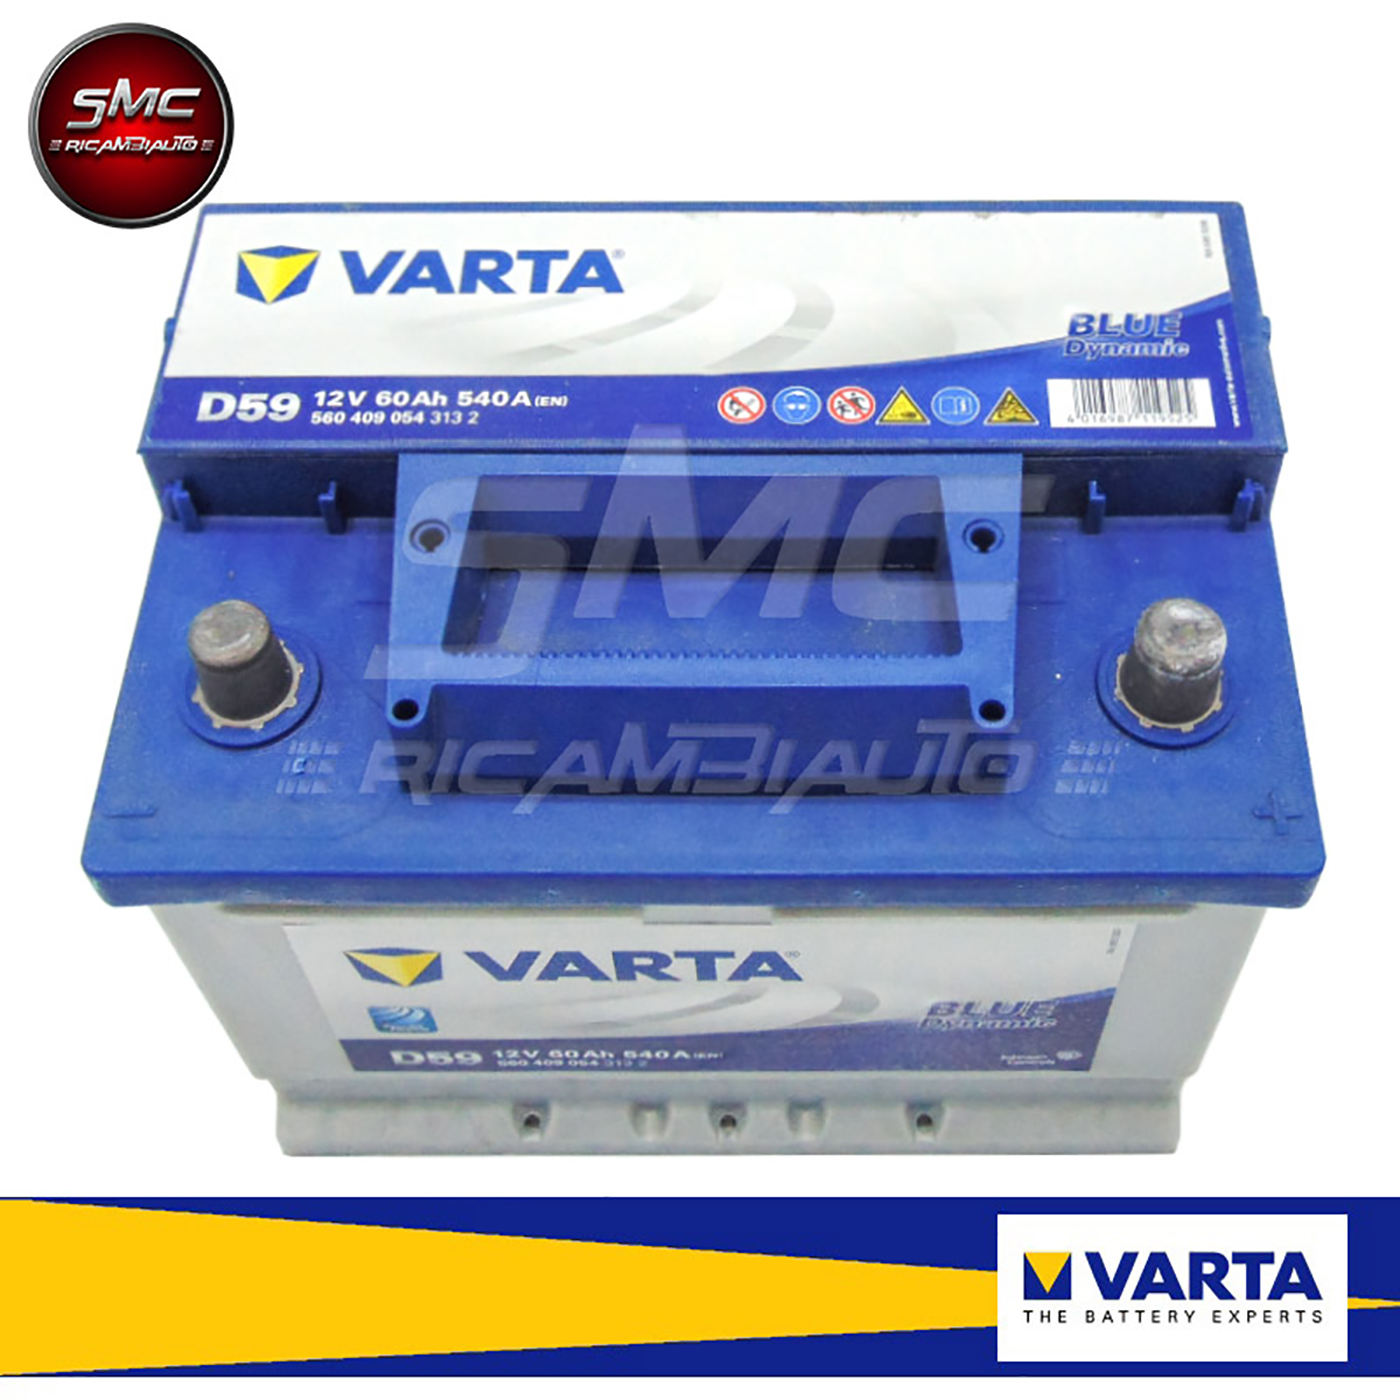 Varta Blue Dynamic Autobatterie 12V 60Ah 60 Ah 560409 D 59 / PKW